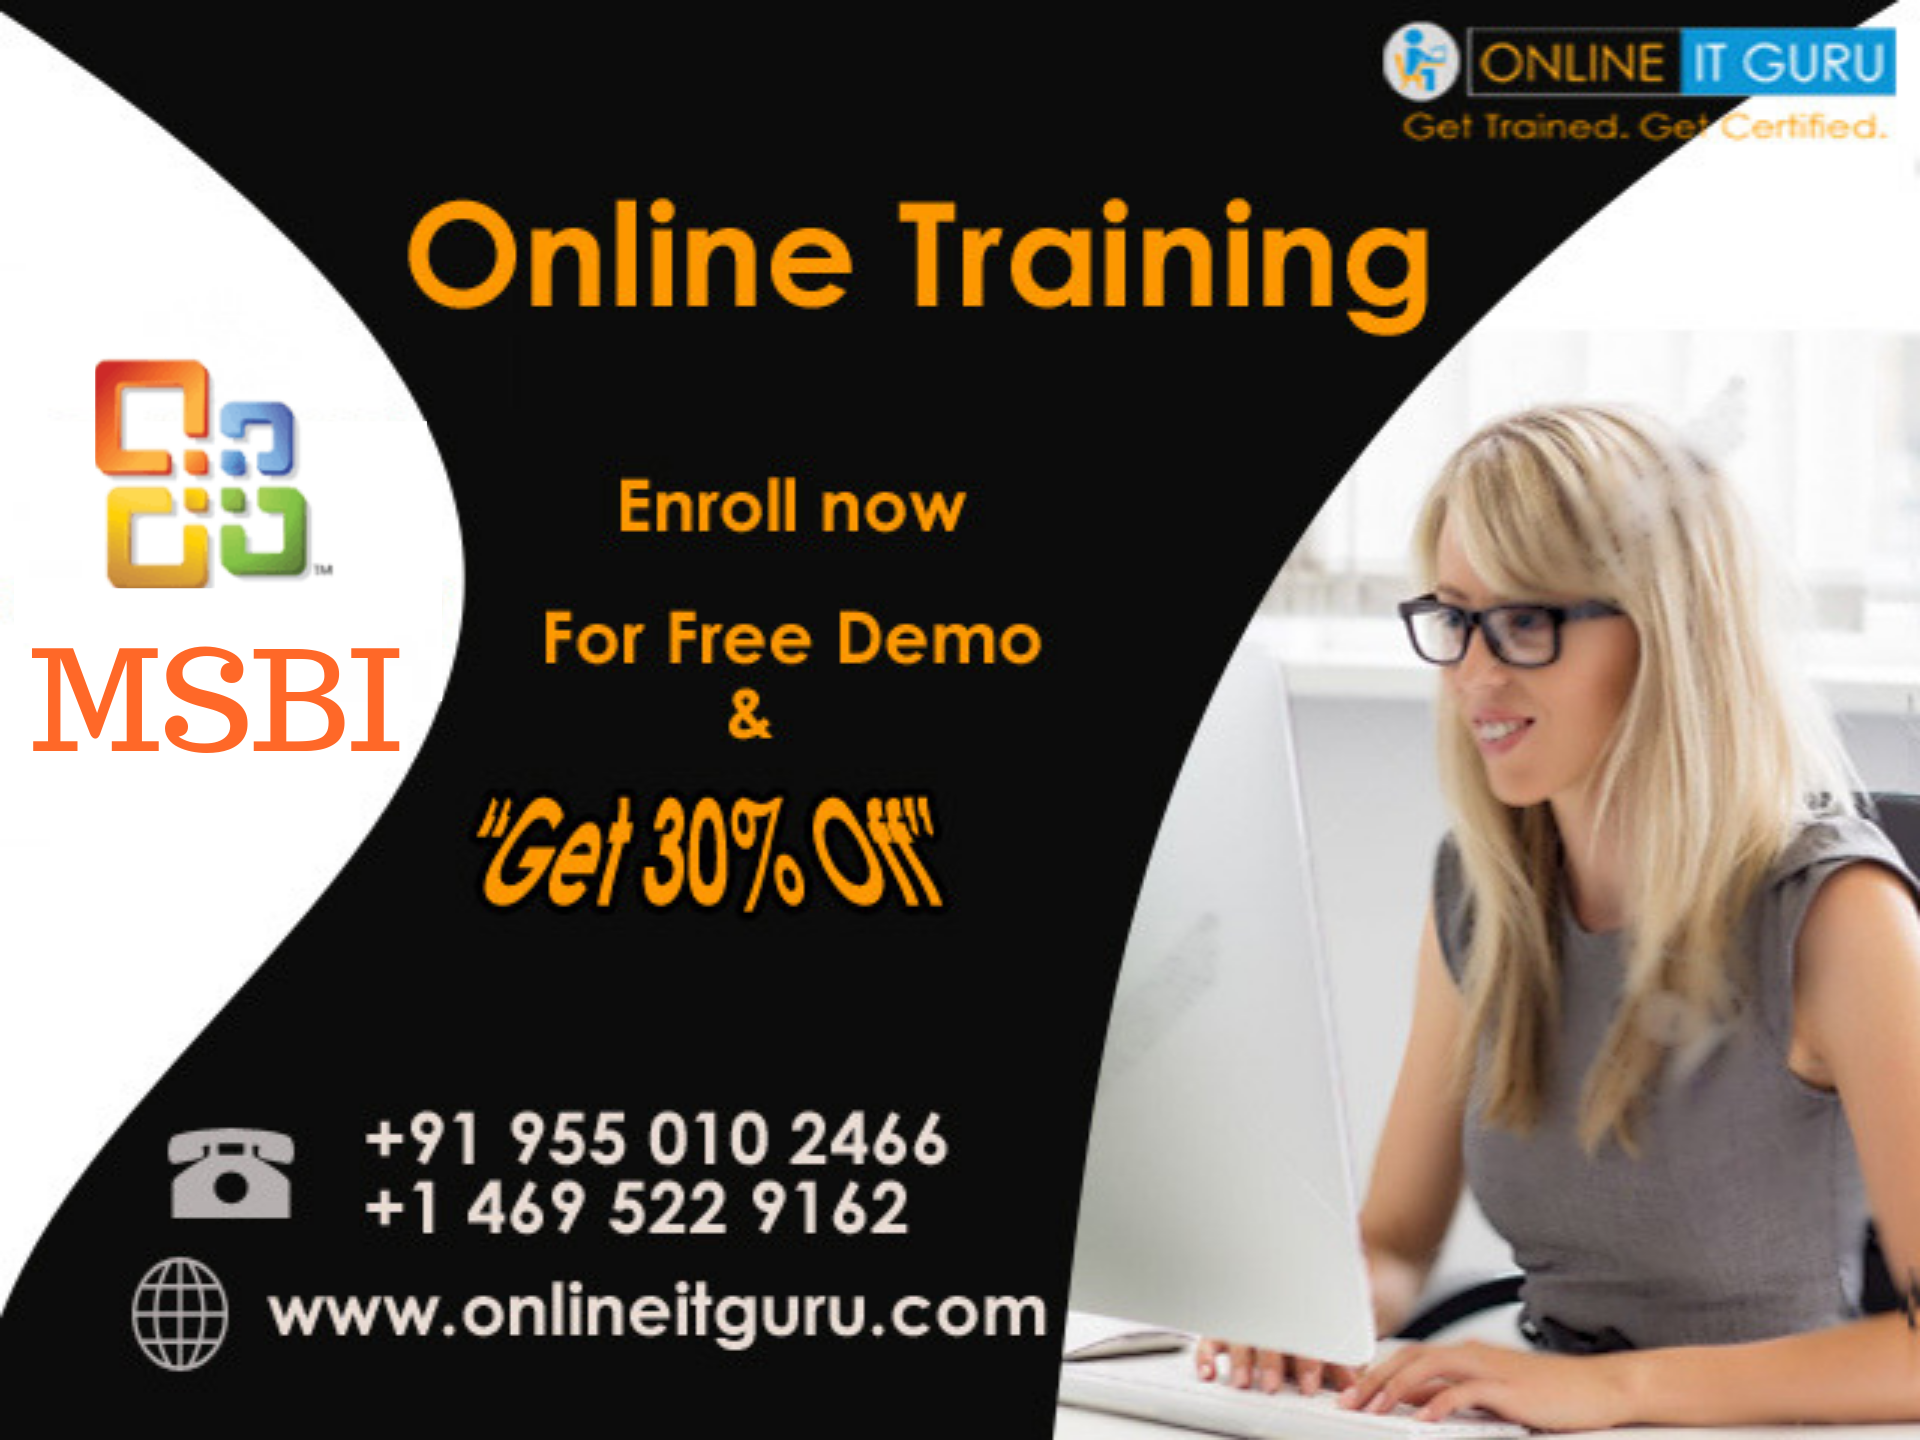 msbi online training india, Hyderabad, Andhra Pradesh, India